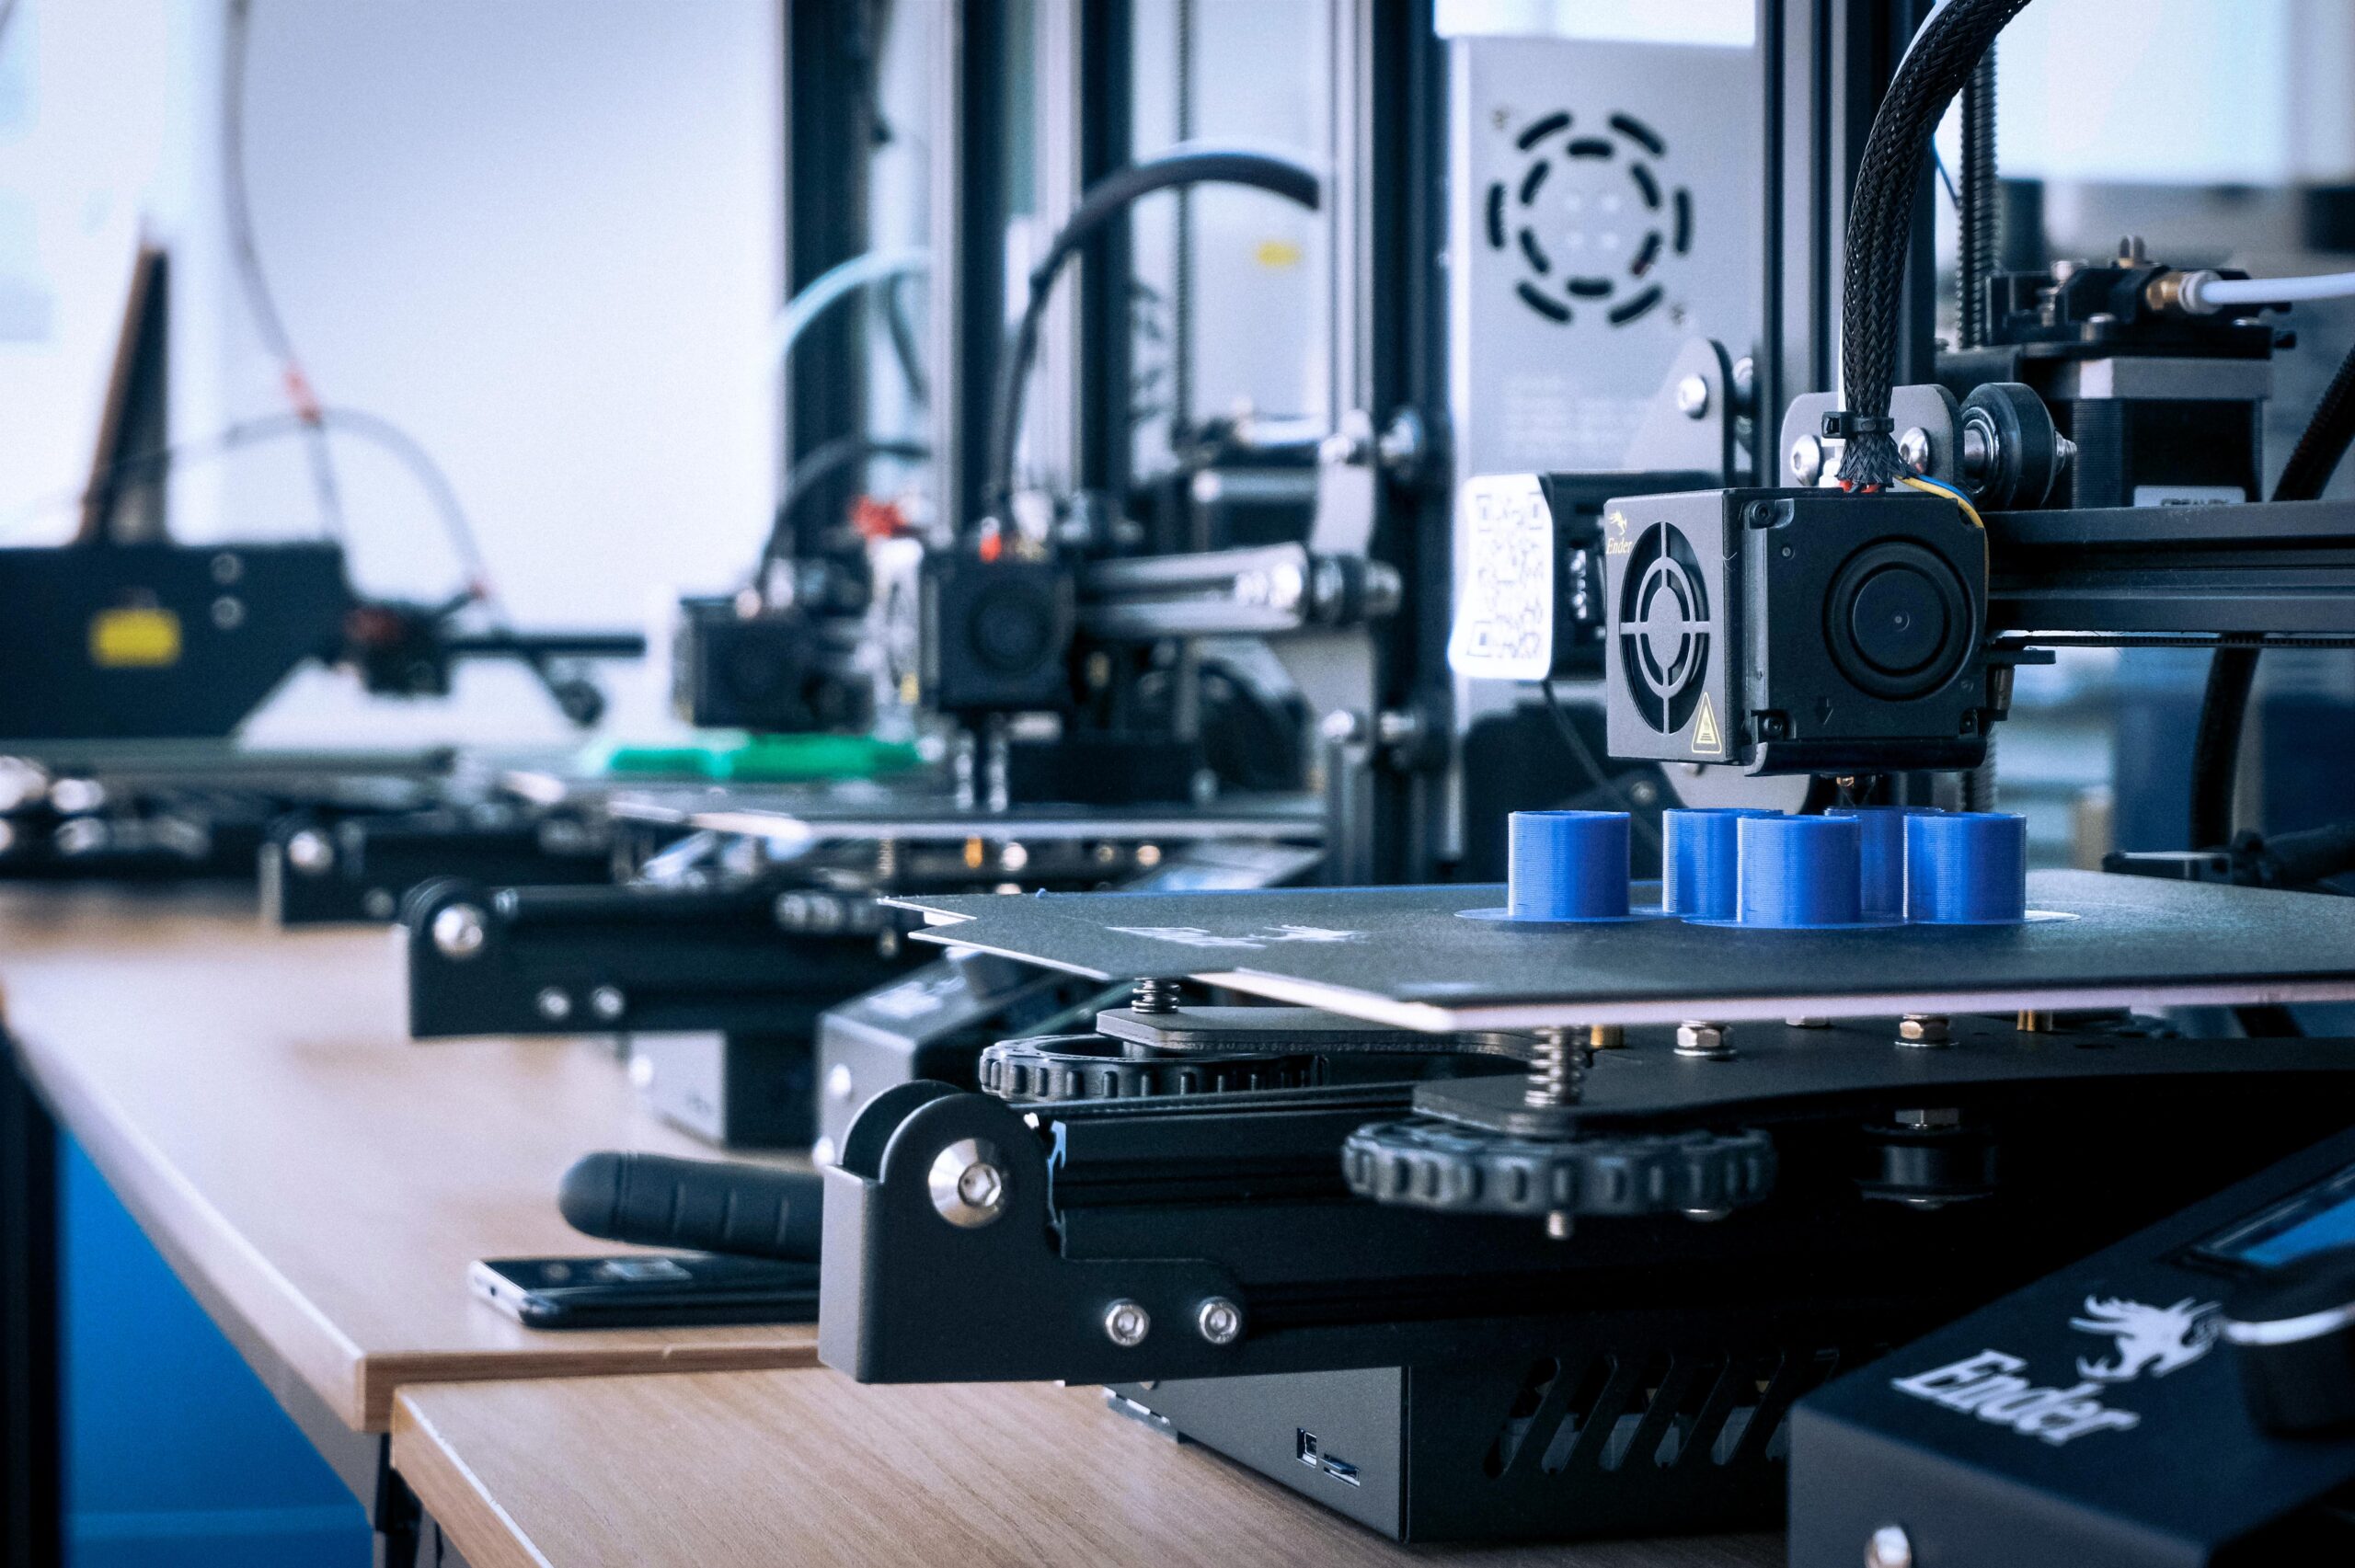 Best 3D Printers Under 200